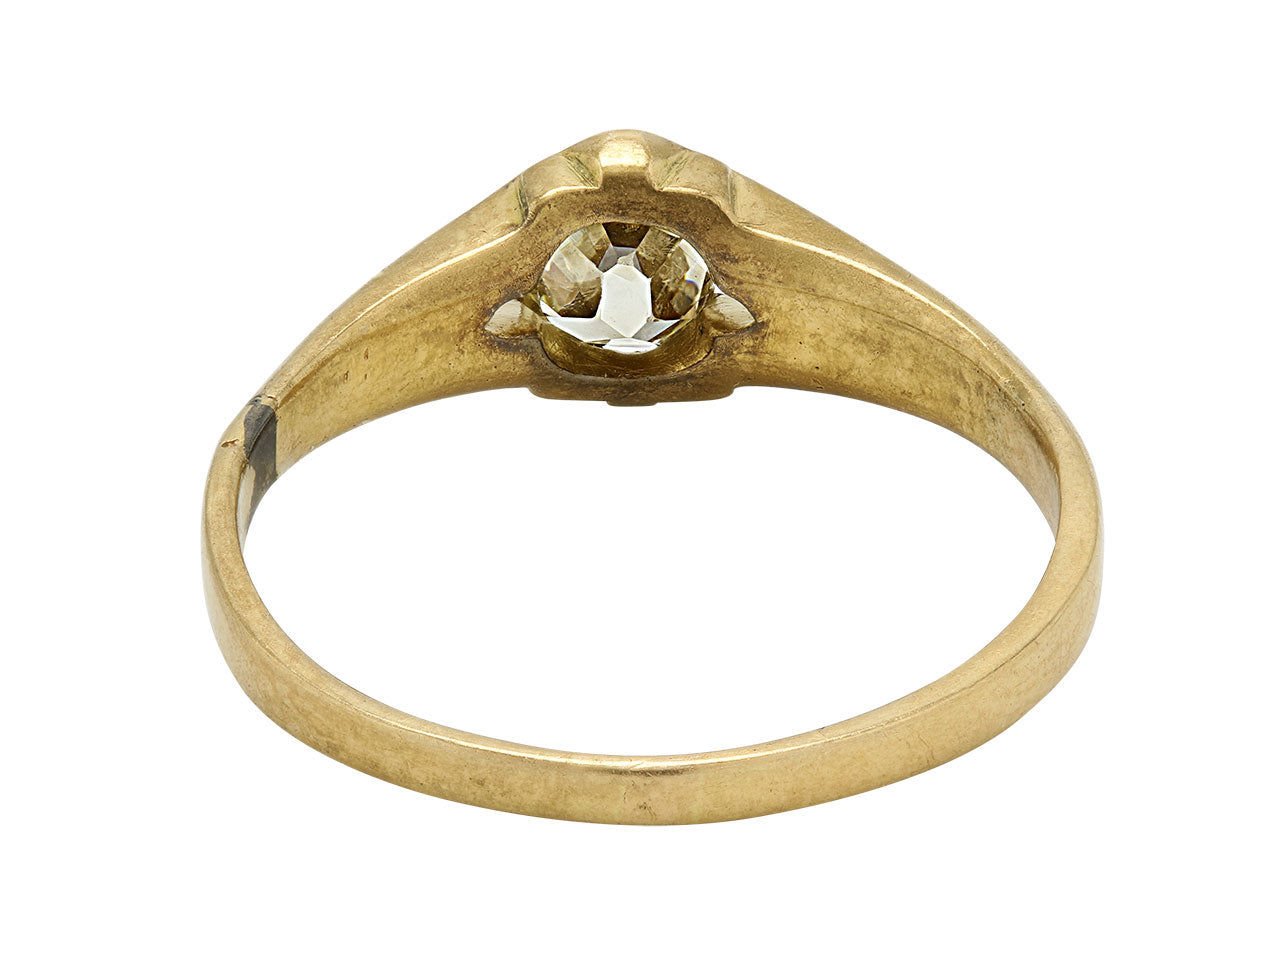 Antique Diamond Ring in 14K Gold